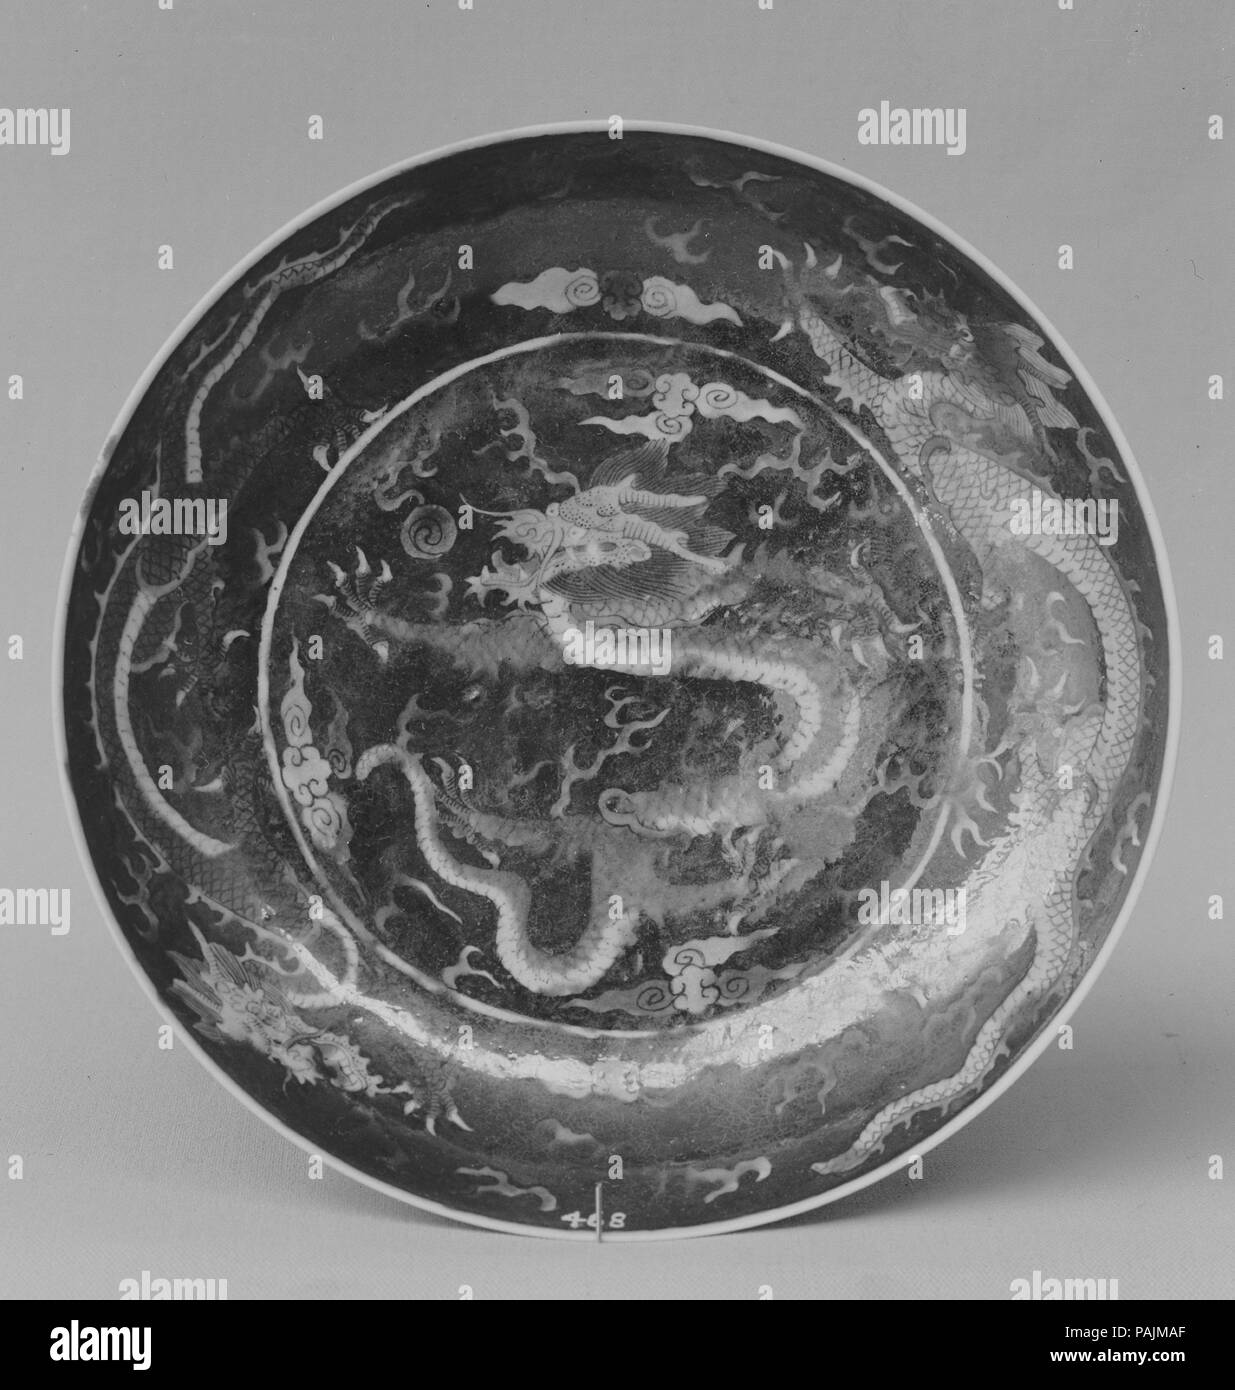 Plate. Culture: China. Dimensions: Diam. 5 7/8 in. (14.9 cm). Museum: Metropolitan Museum of Art, New York, USA. Stock Photo